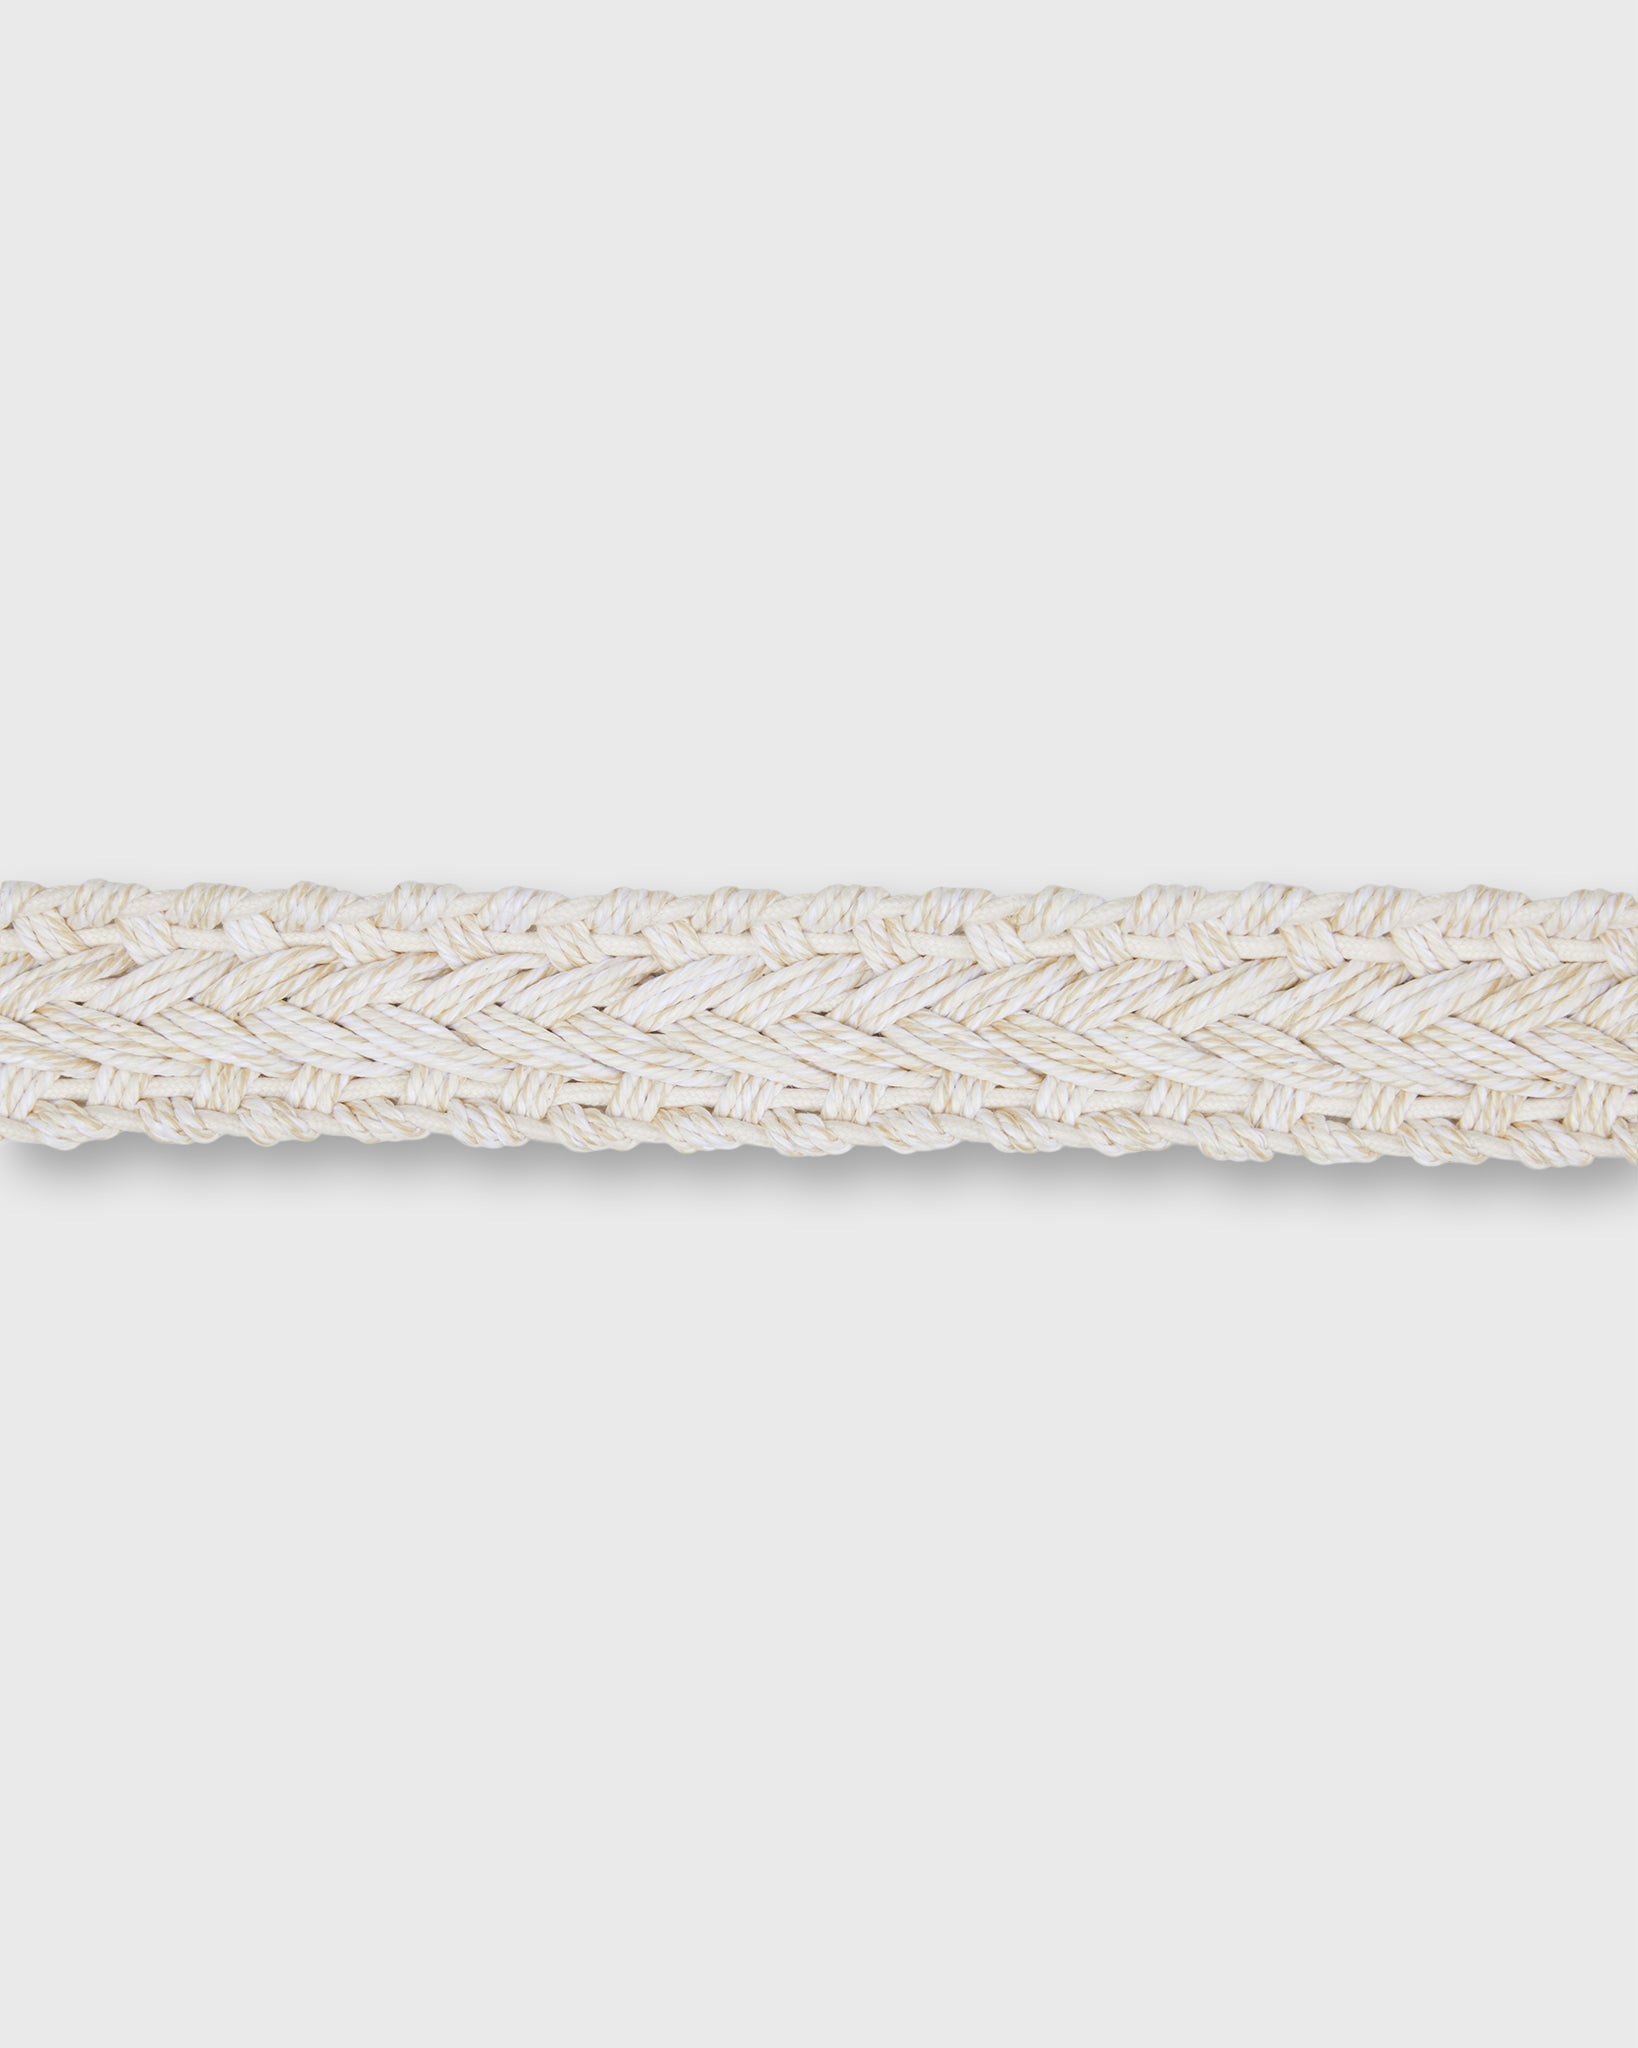 1" Woven Double O-Ring Belt in Bone Cotton